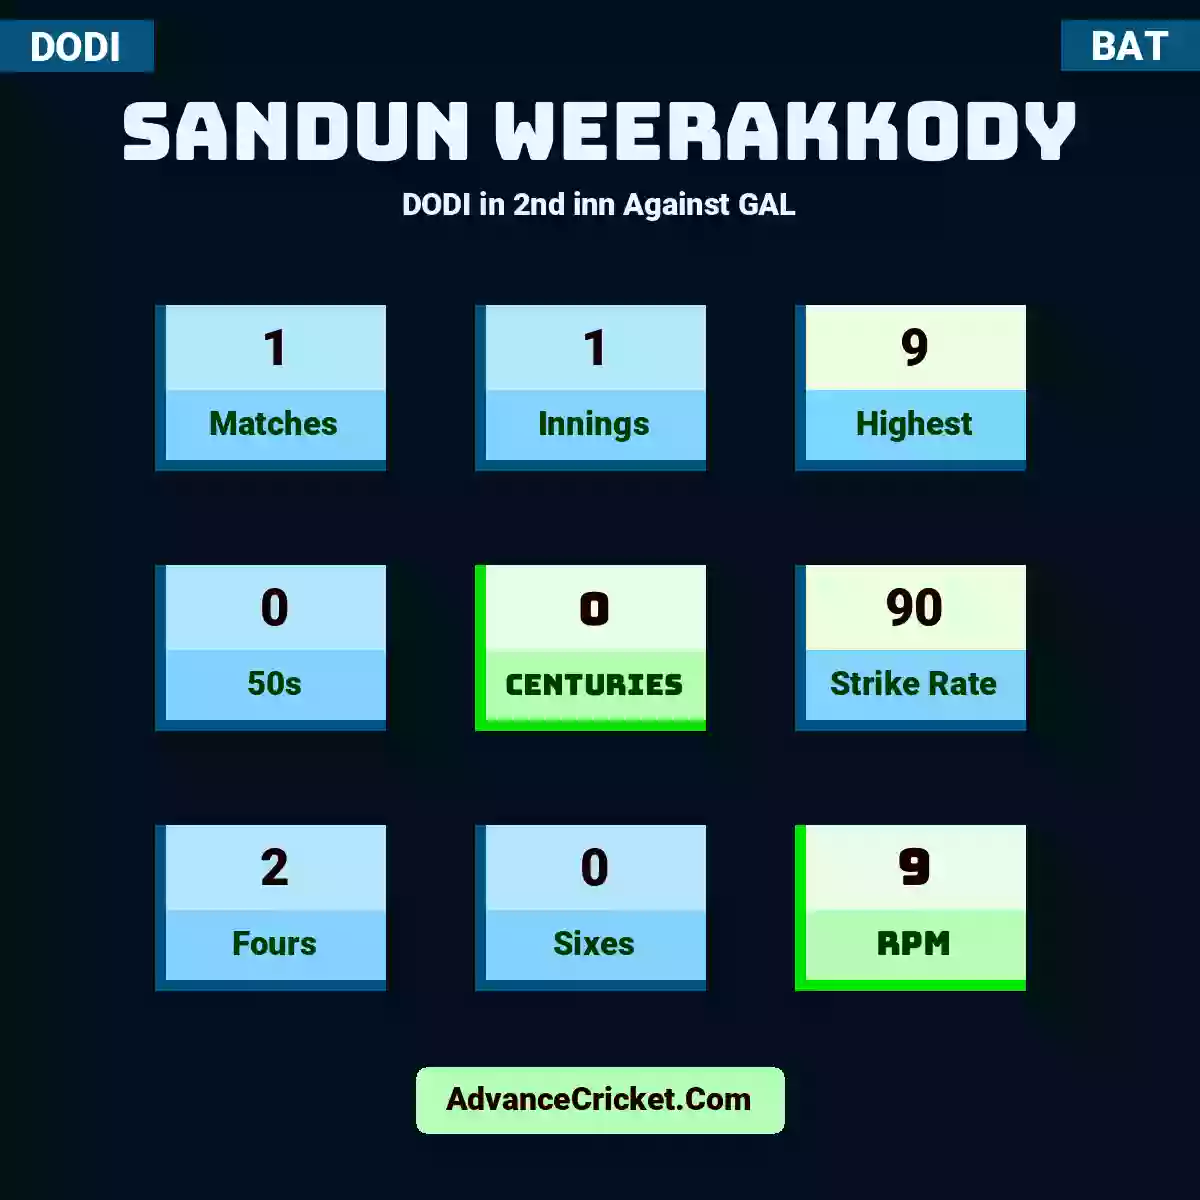 Sandun Weerakkody DODI  in 2nd inn Against GAL, Sandun Weerakkody played 1 matches, scored 9 runs as highest, 0 half-centuries, and 0 centuries, with a strike rate of 90. S.Weerakkody hit 2 fours and 0 sixes, with an RPM of 9.